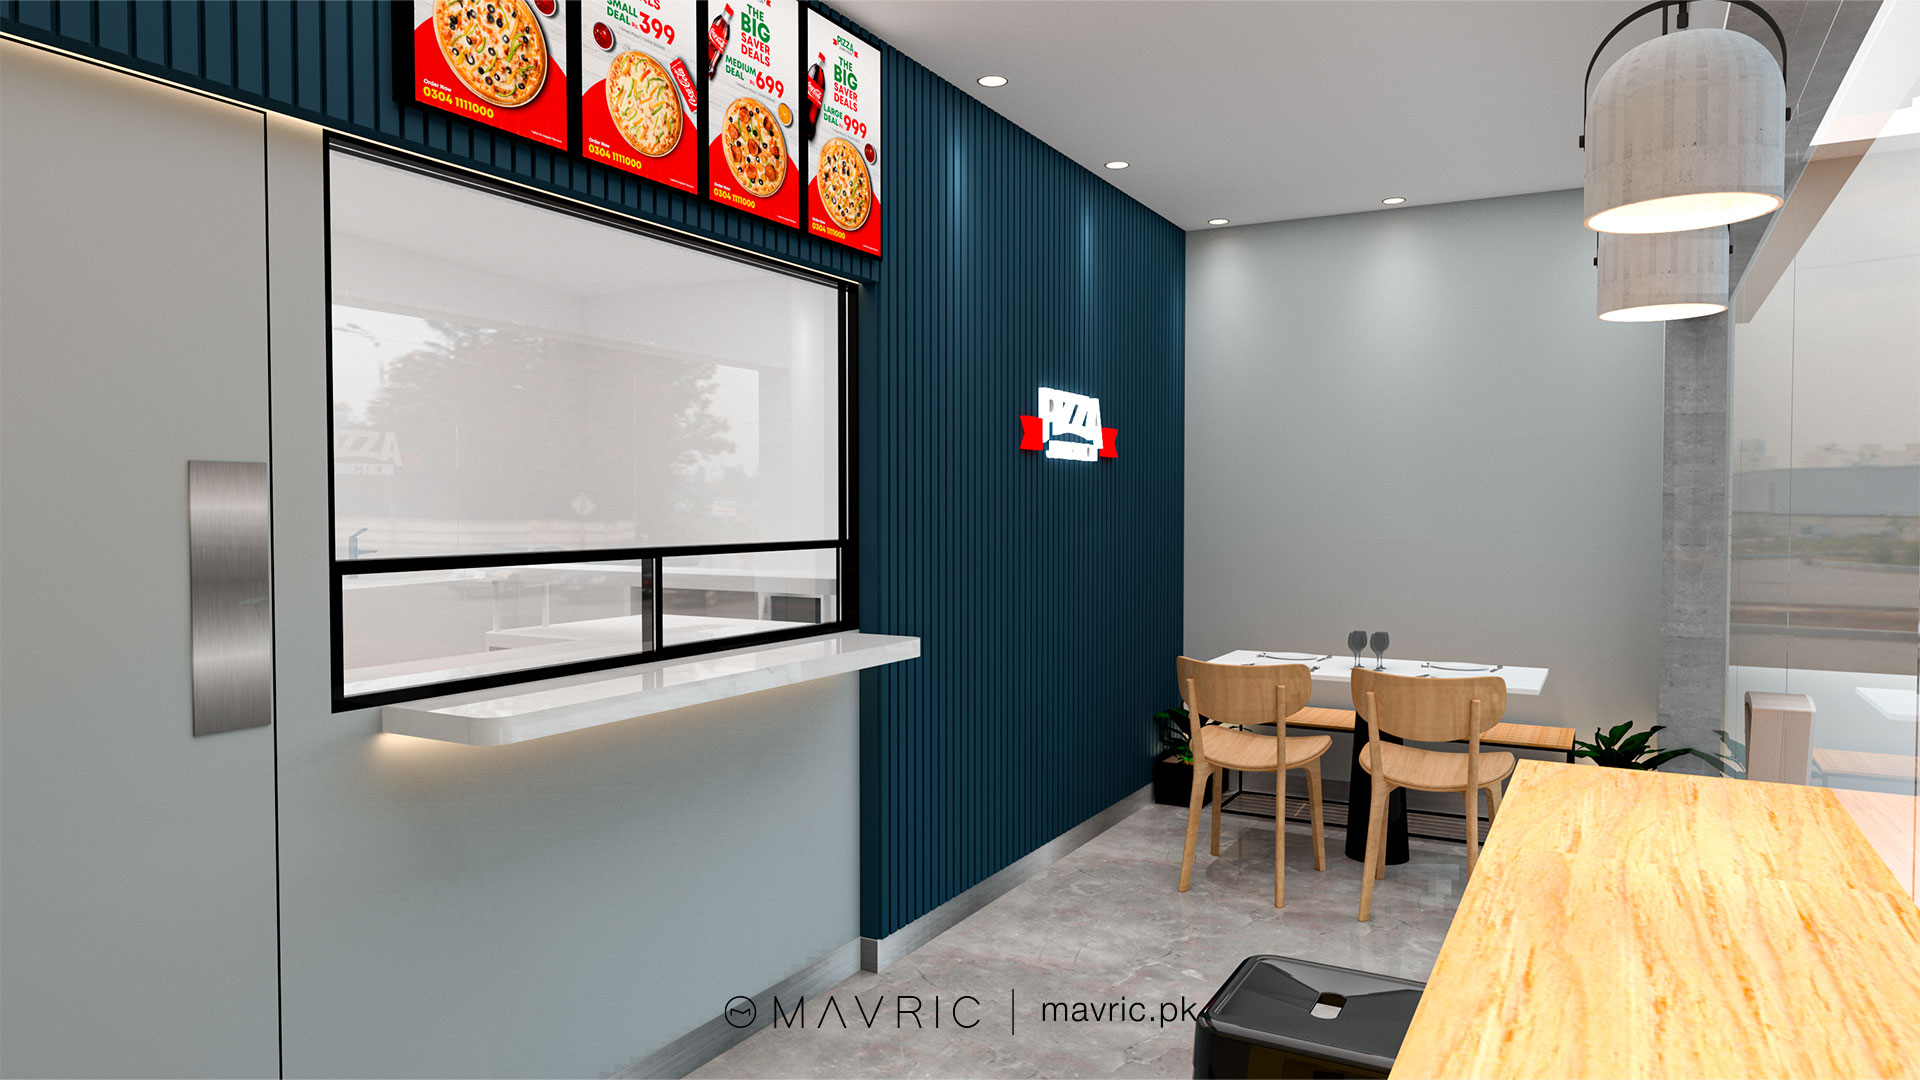 Architectural-interior-design-retail-commercial-design-lahore-pizza-junction-04